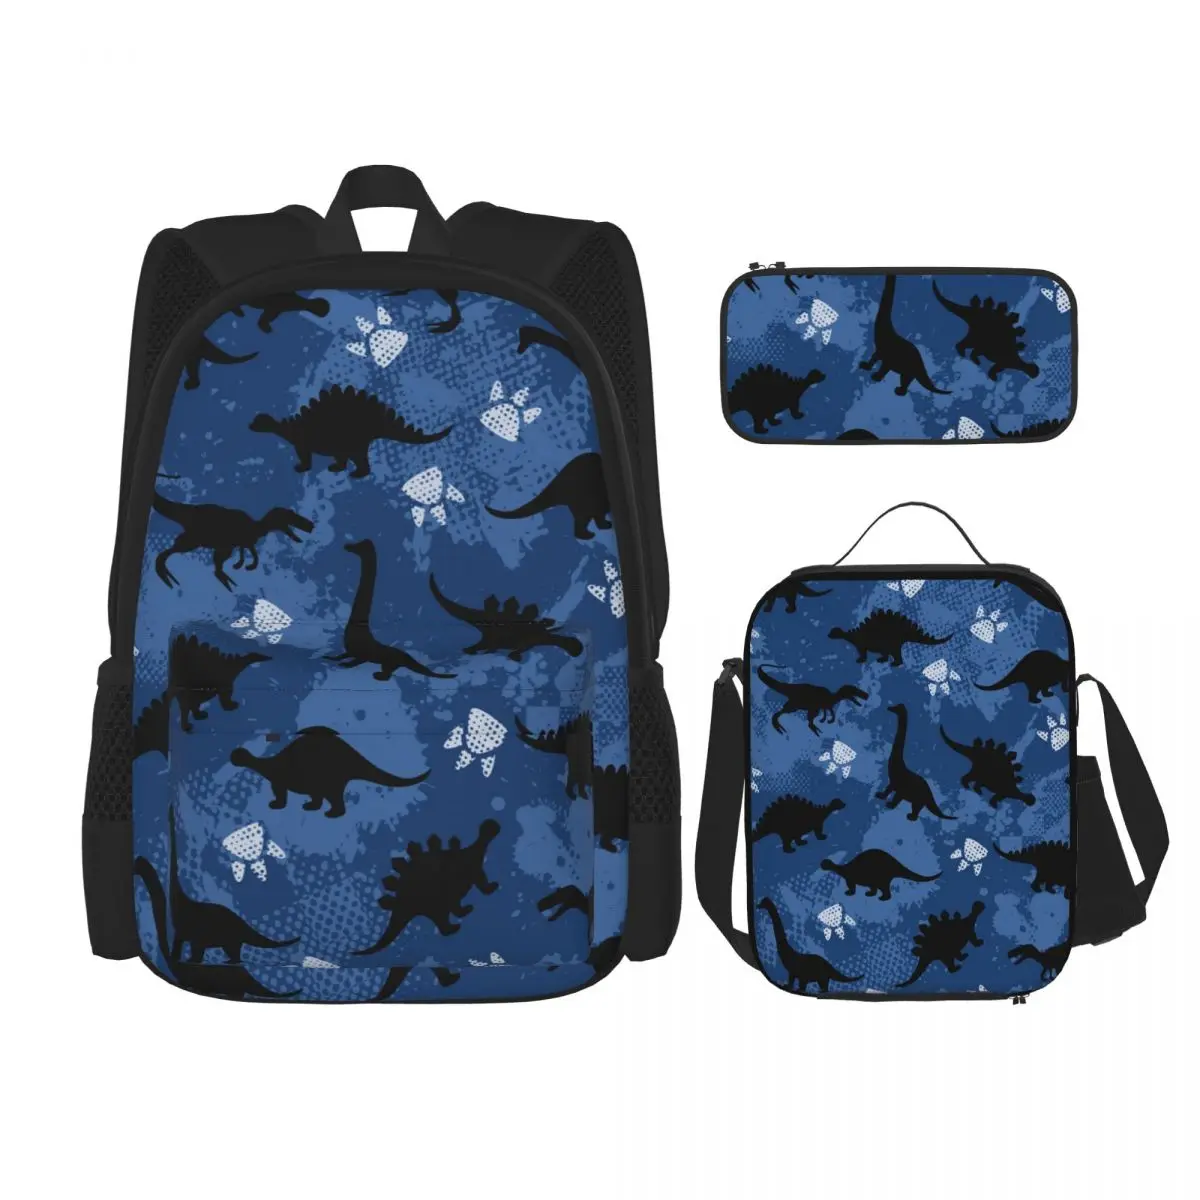 

3 Pcs Black Dinosaurs Grunge Backpack Unique Prints Knapsack for Teenagers Girls Boys Travel Bagpack Children School Bags